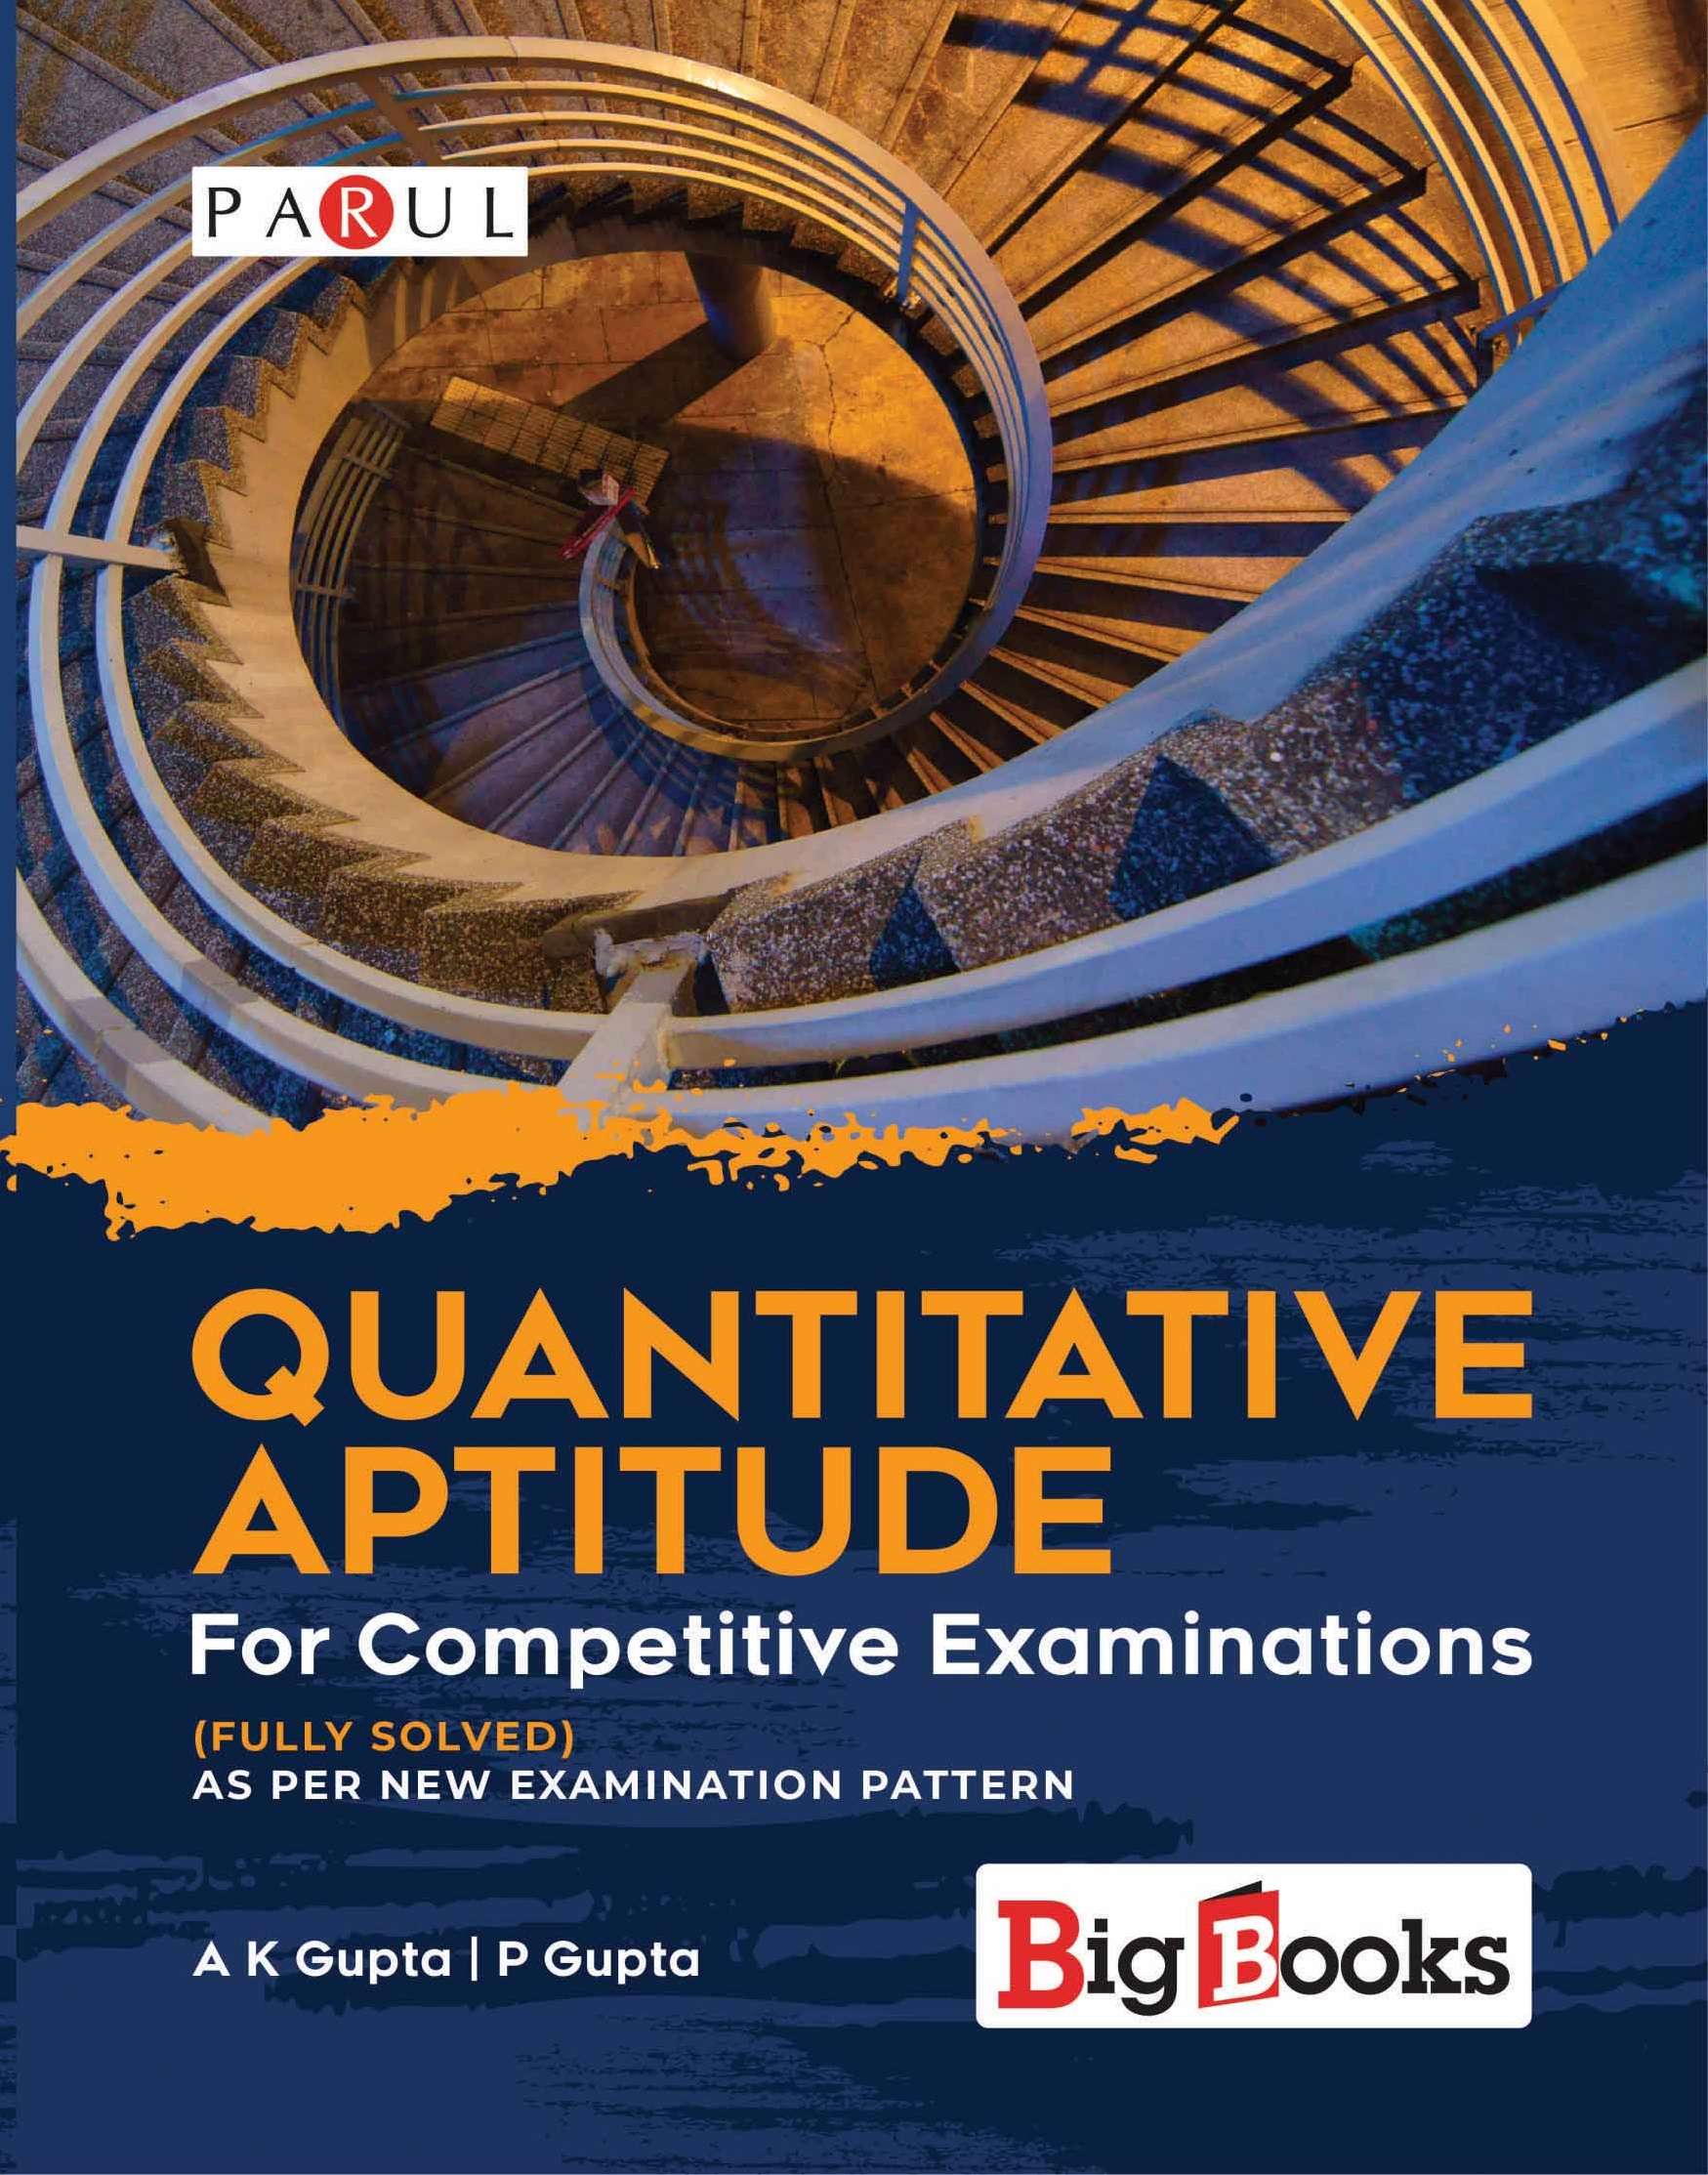 Buy competitive examination books